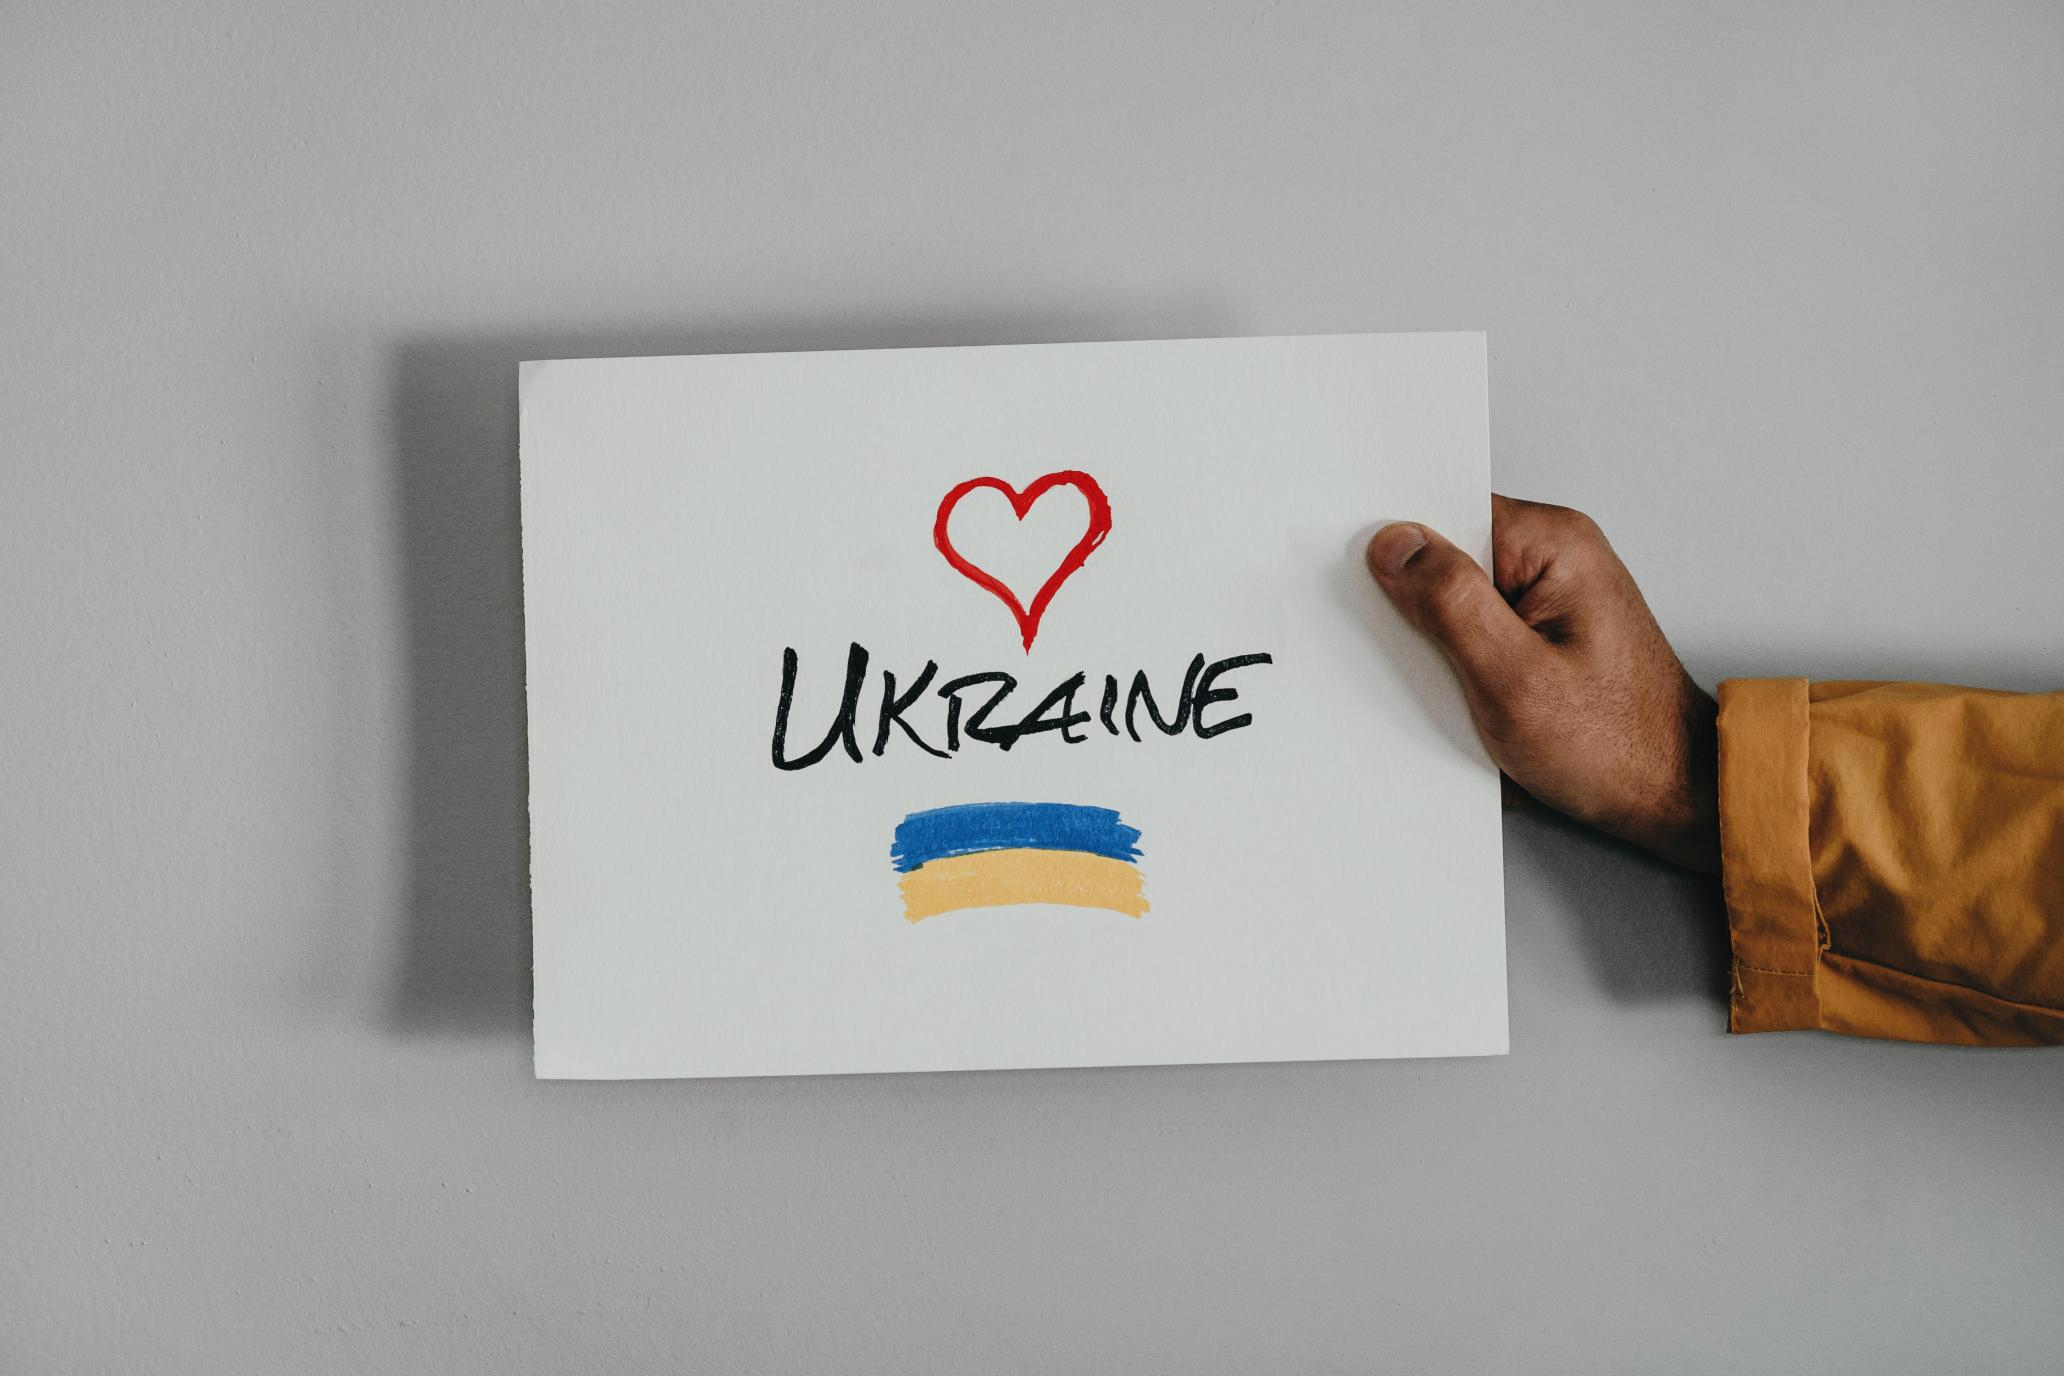 Free English Courses for Ukrainian Refugees